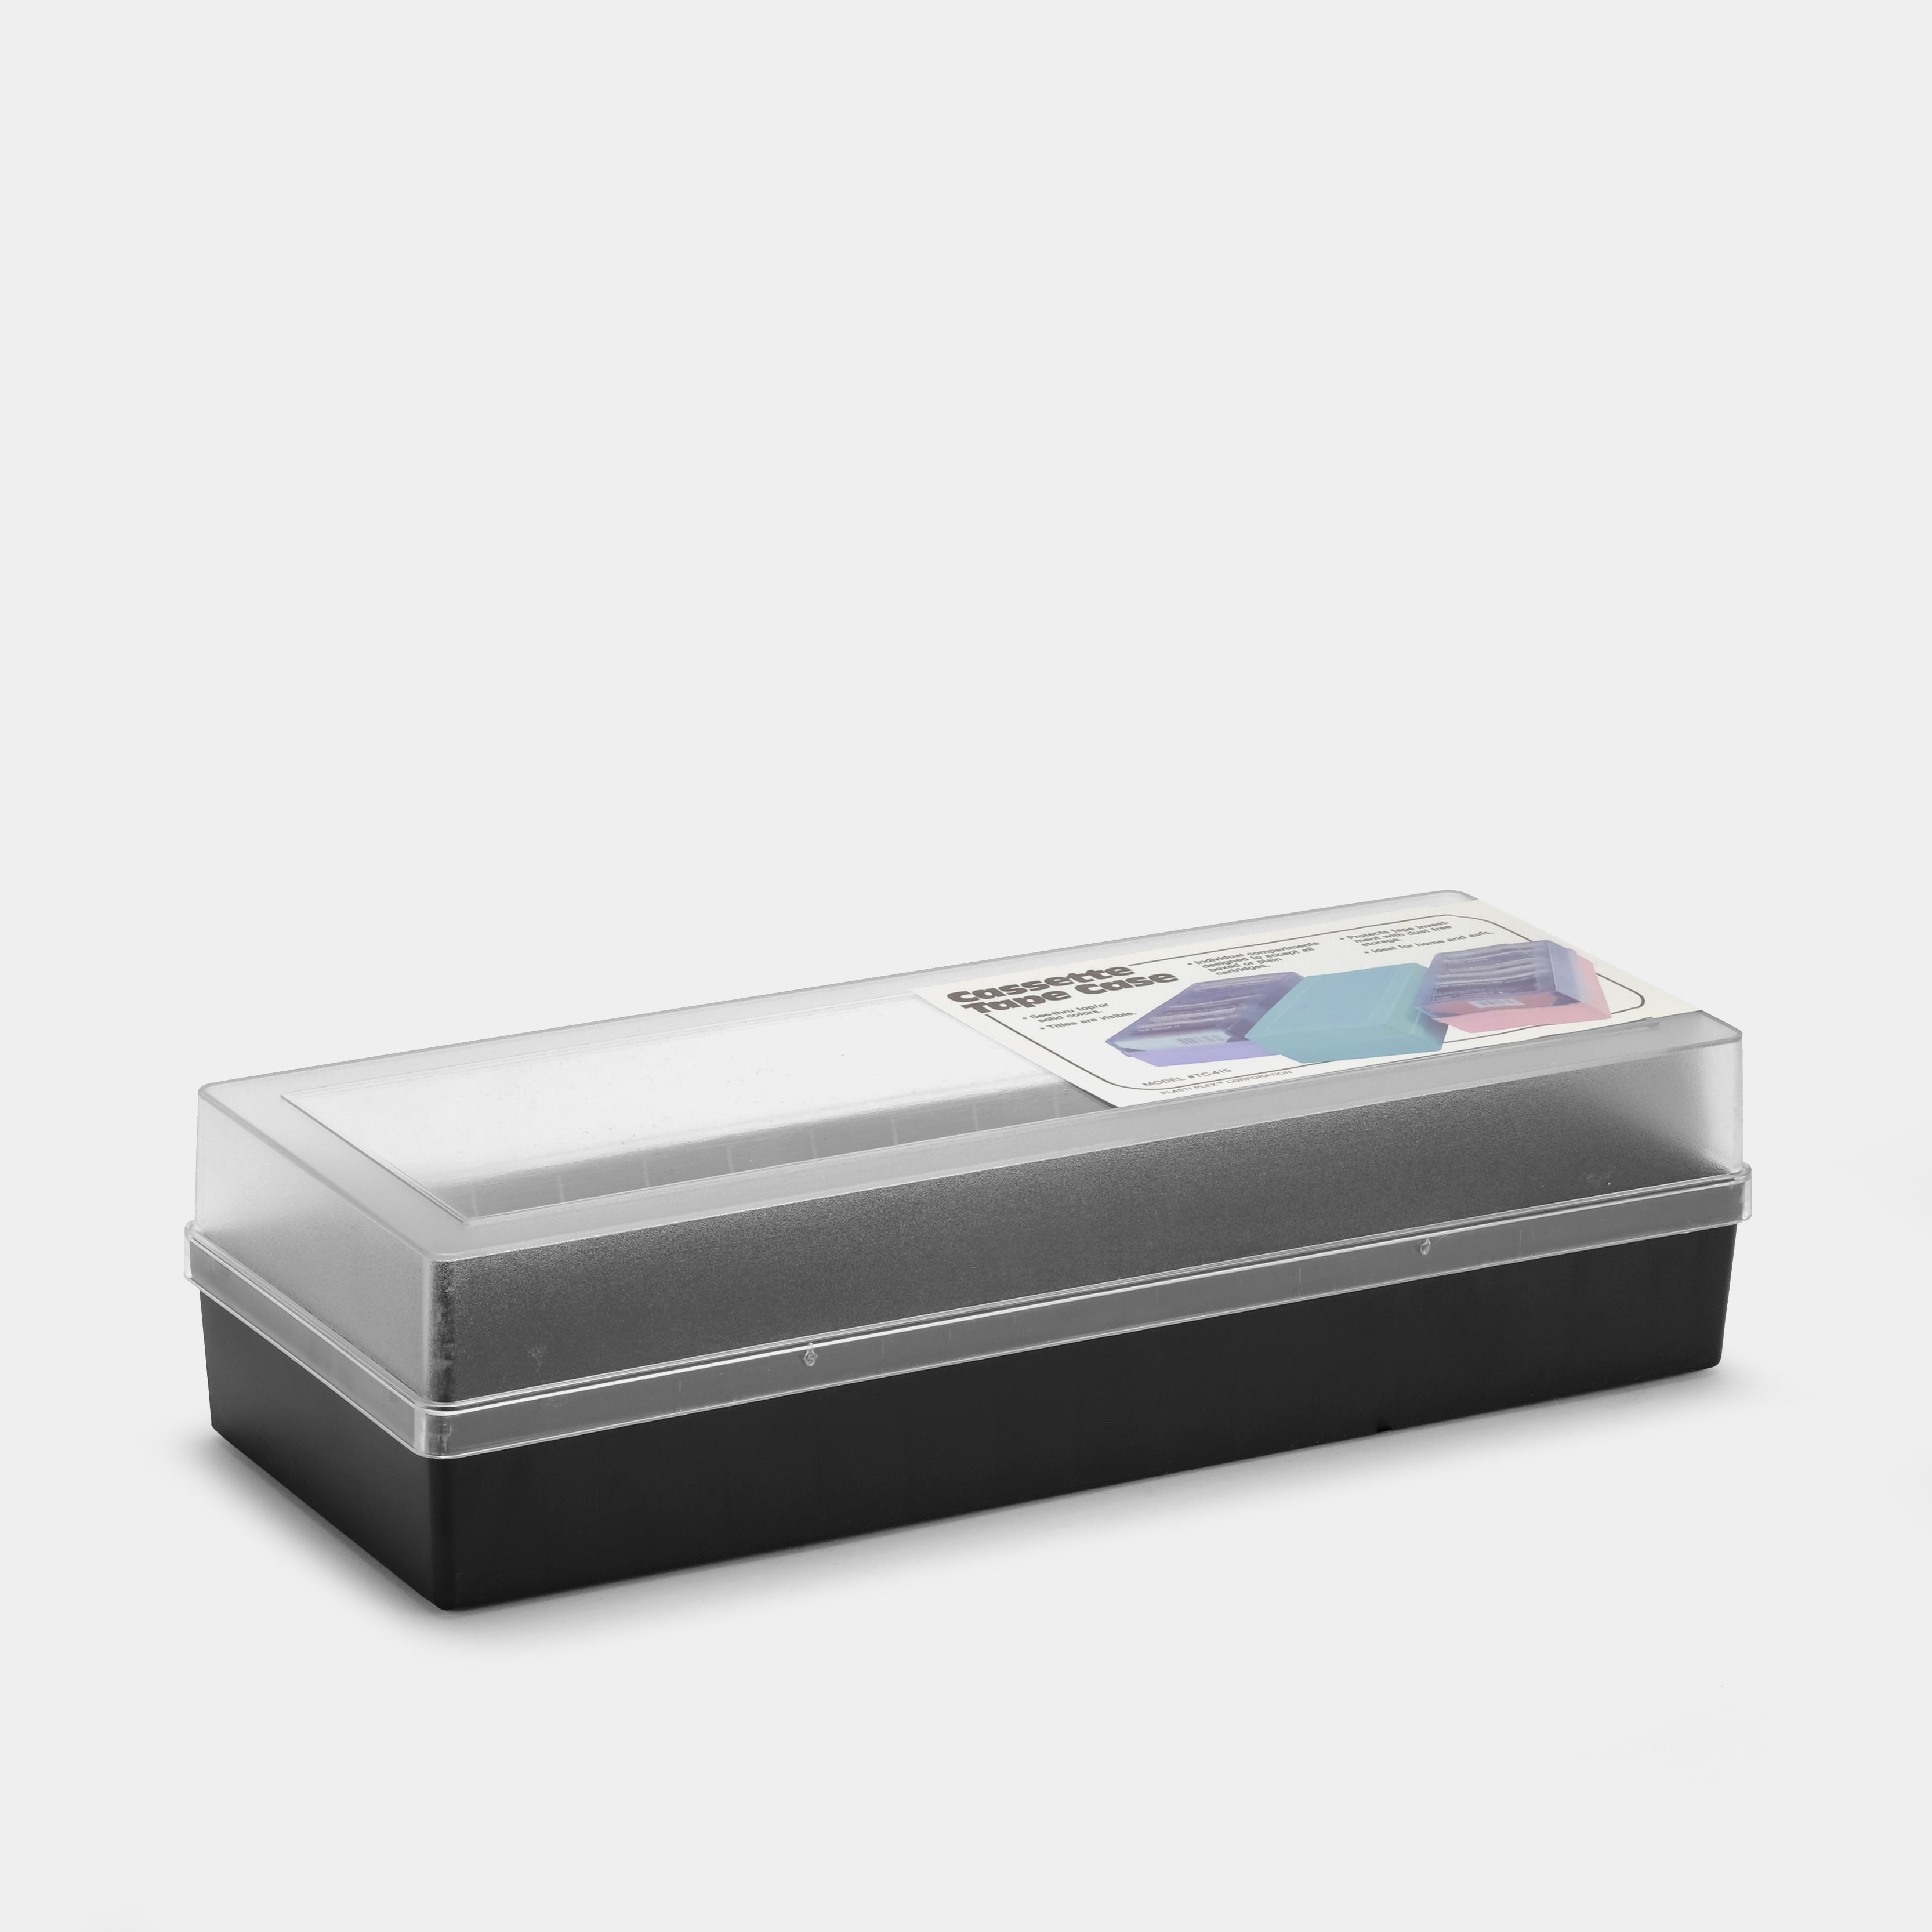 Plasti Plex Cassette Tape Case